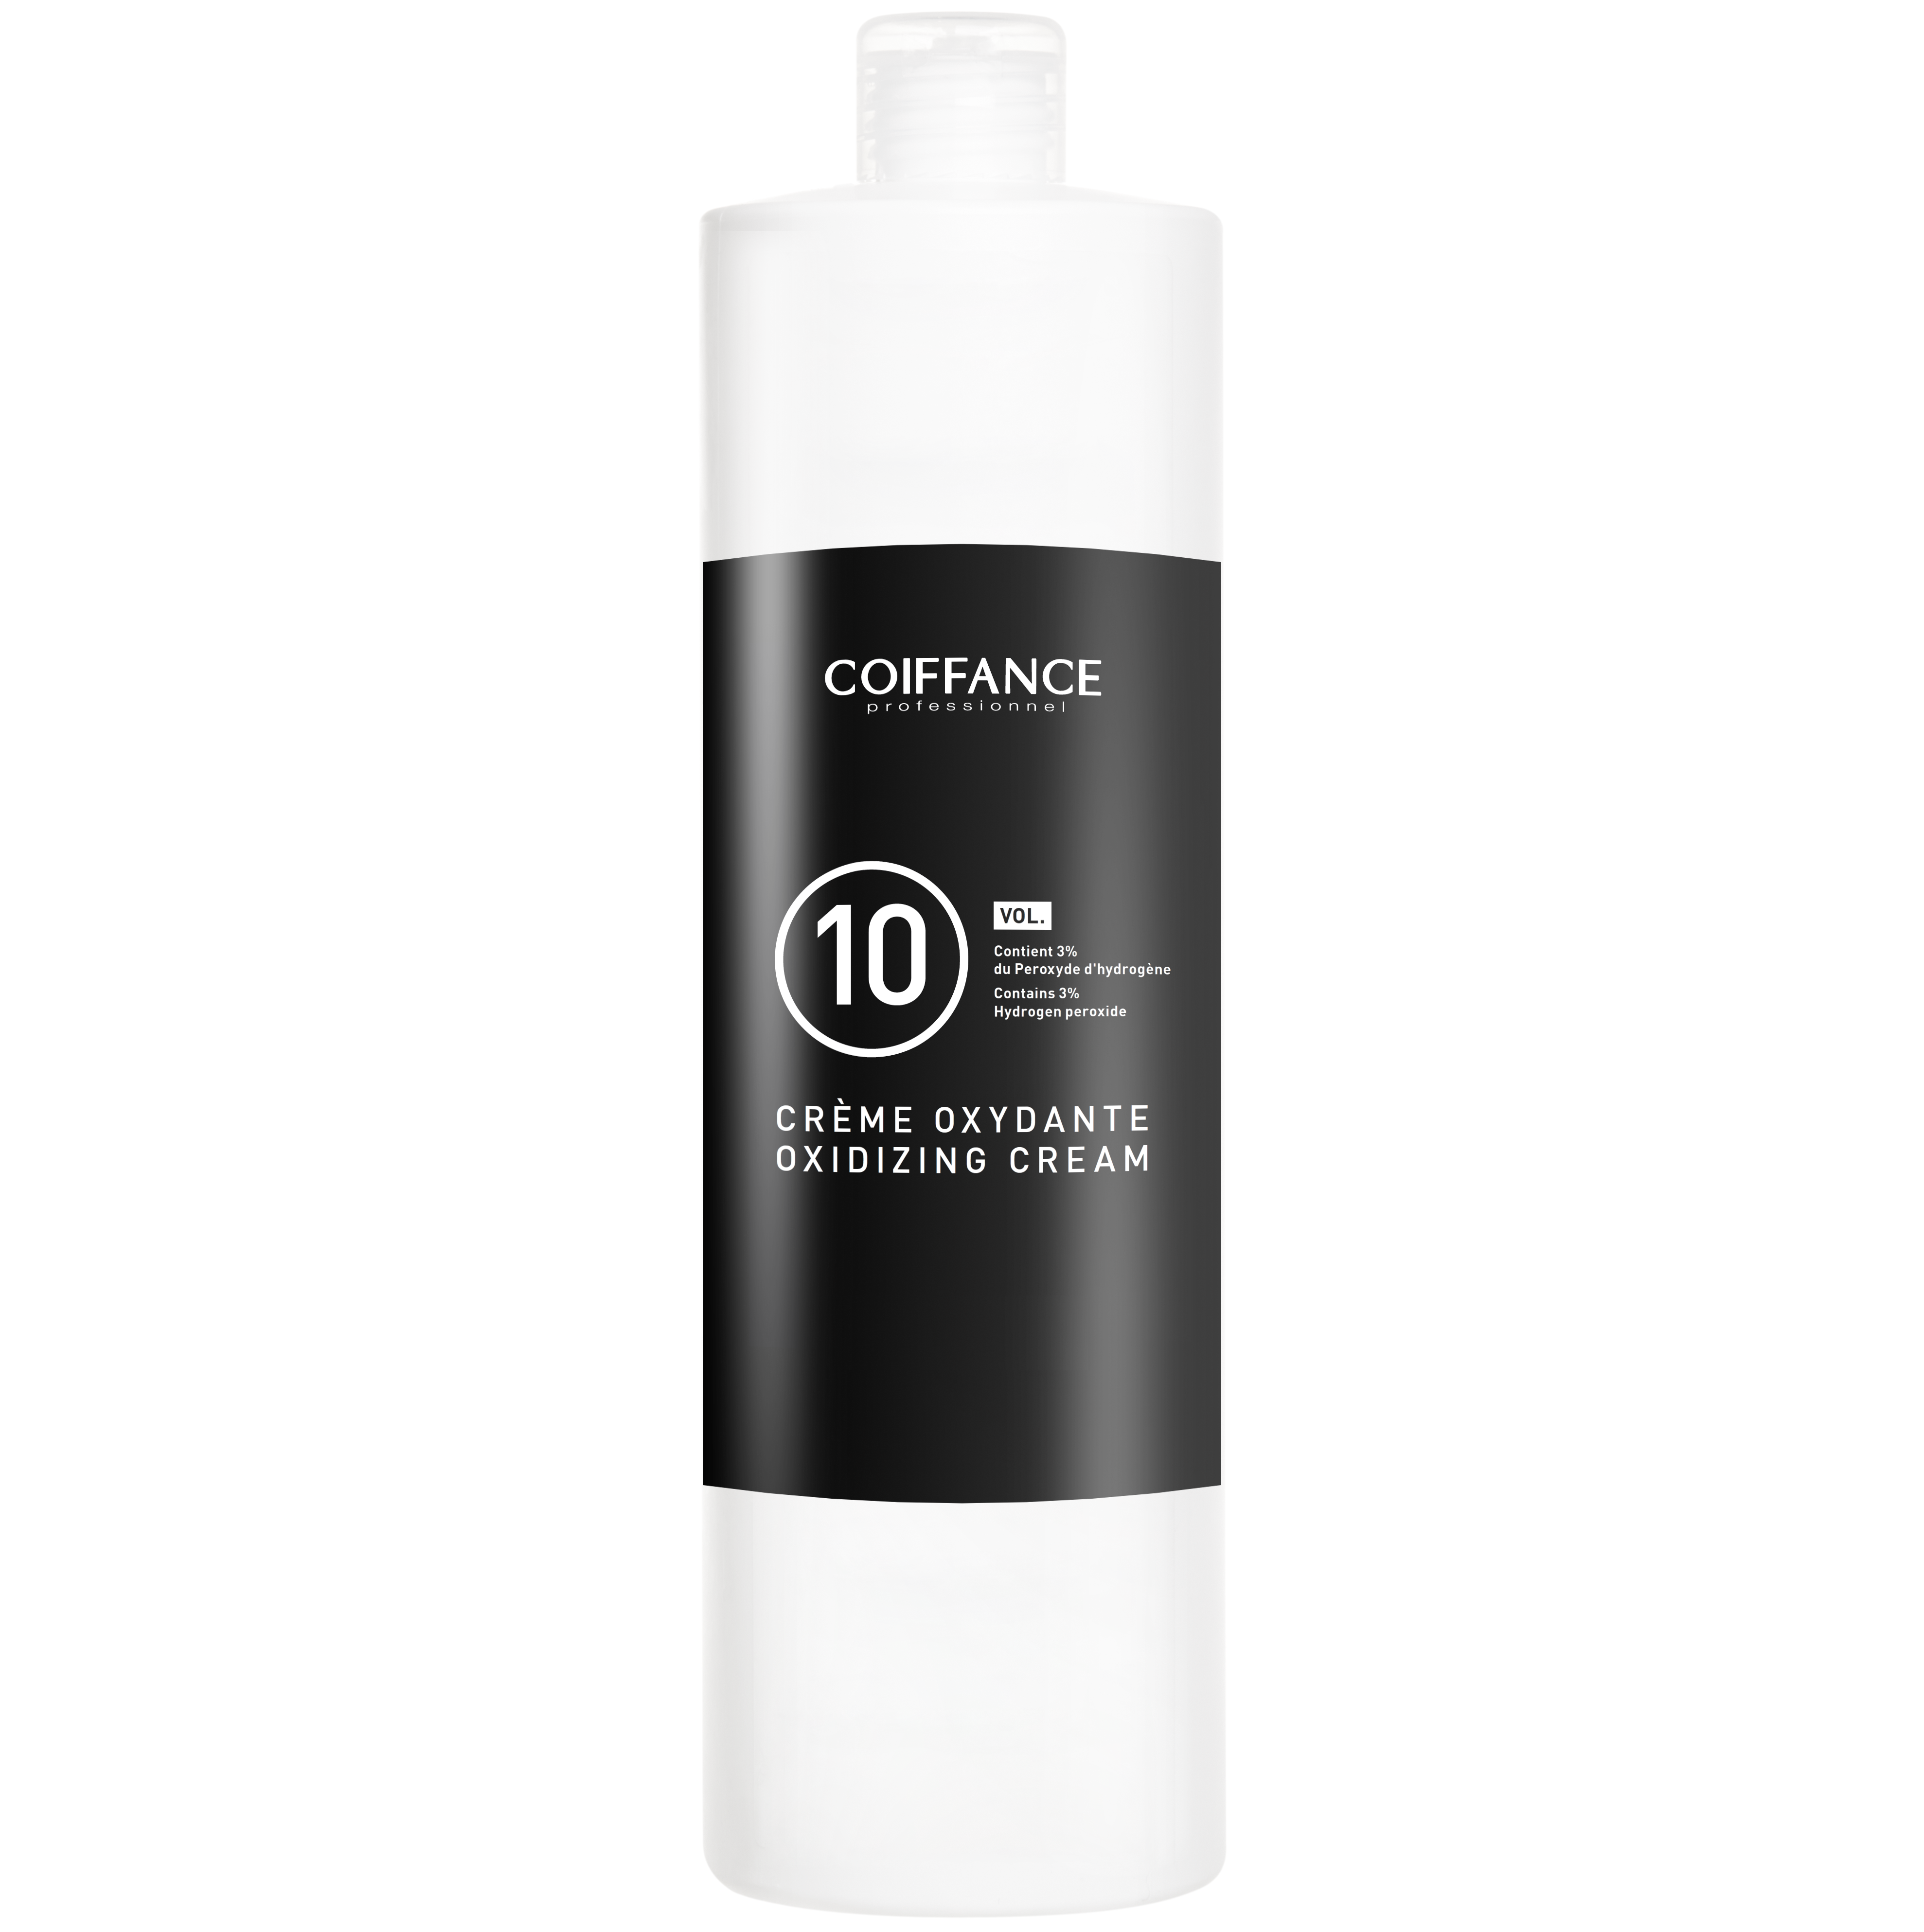 COIFFANCE, Крем-оксидант VOL10 (3%) Color Oxidising Cream, 150 мл.